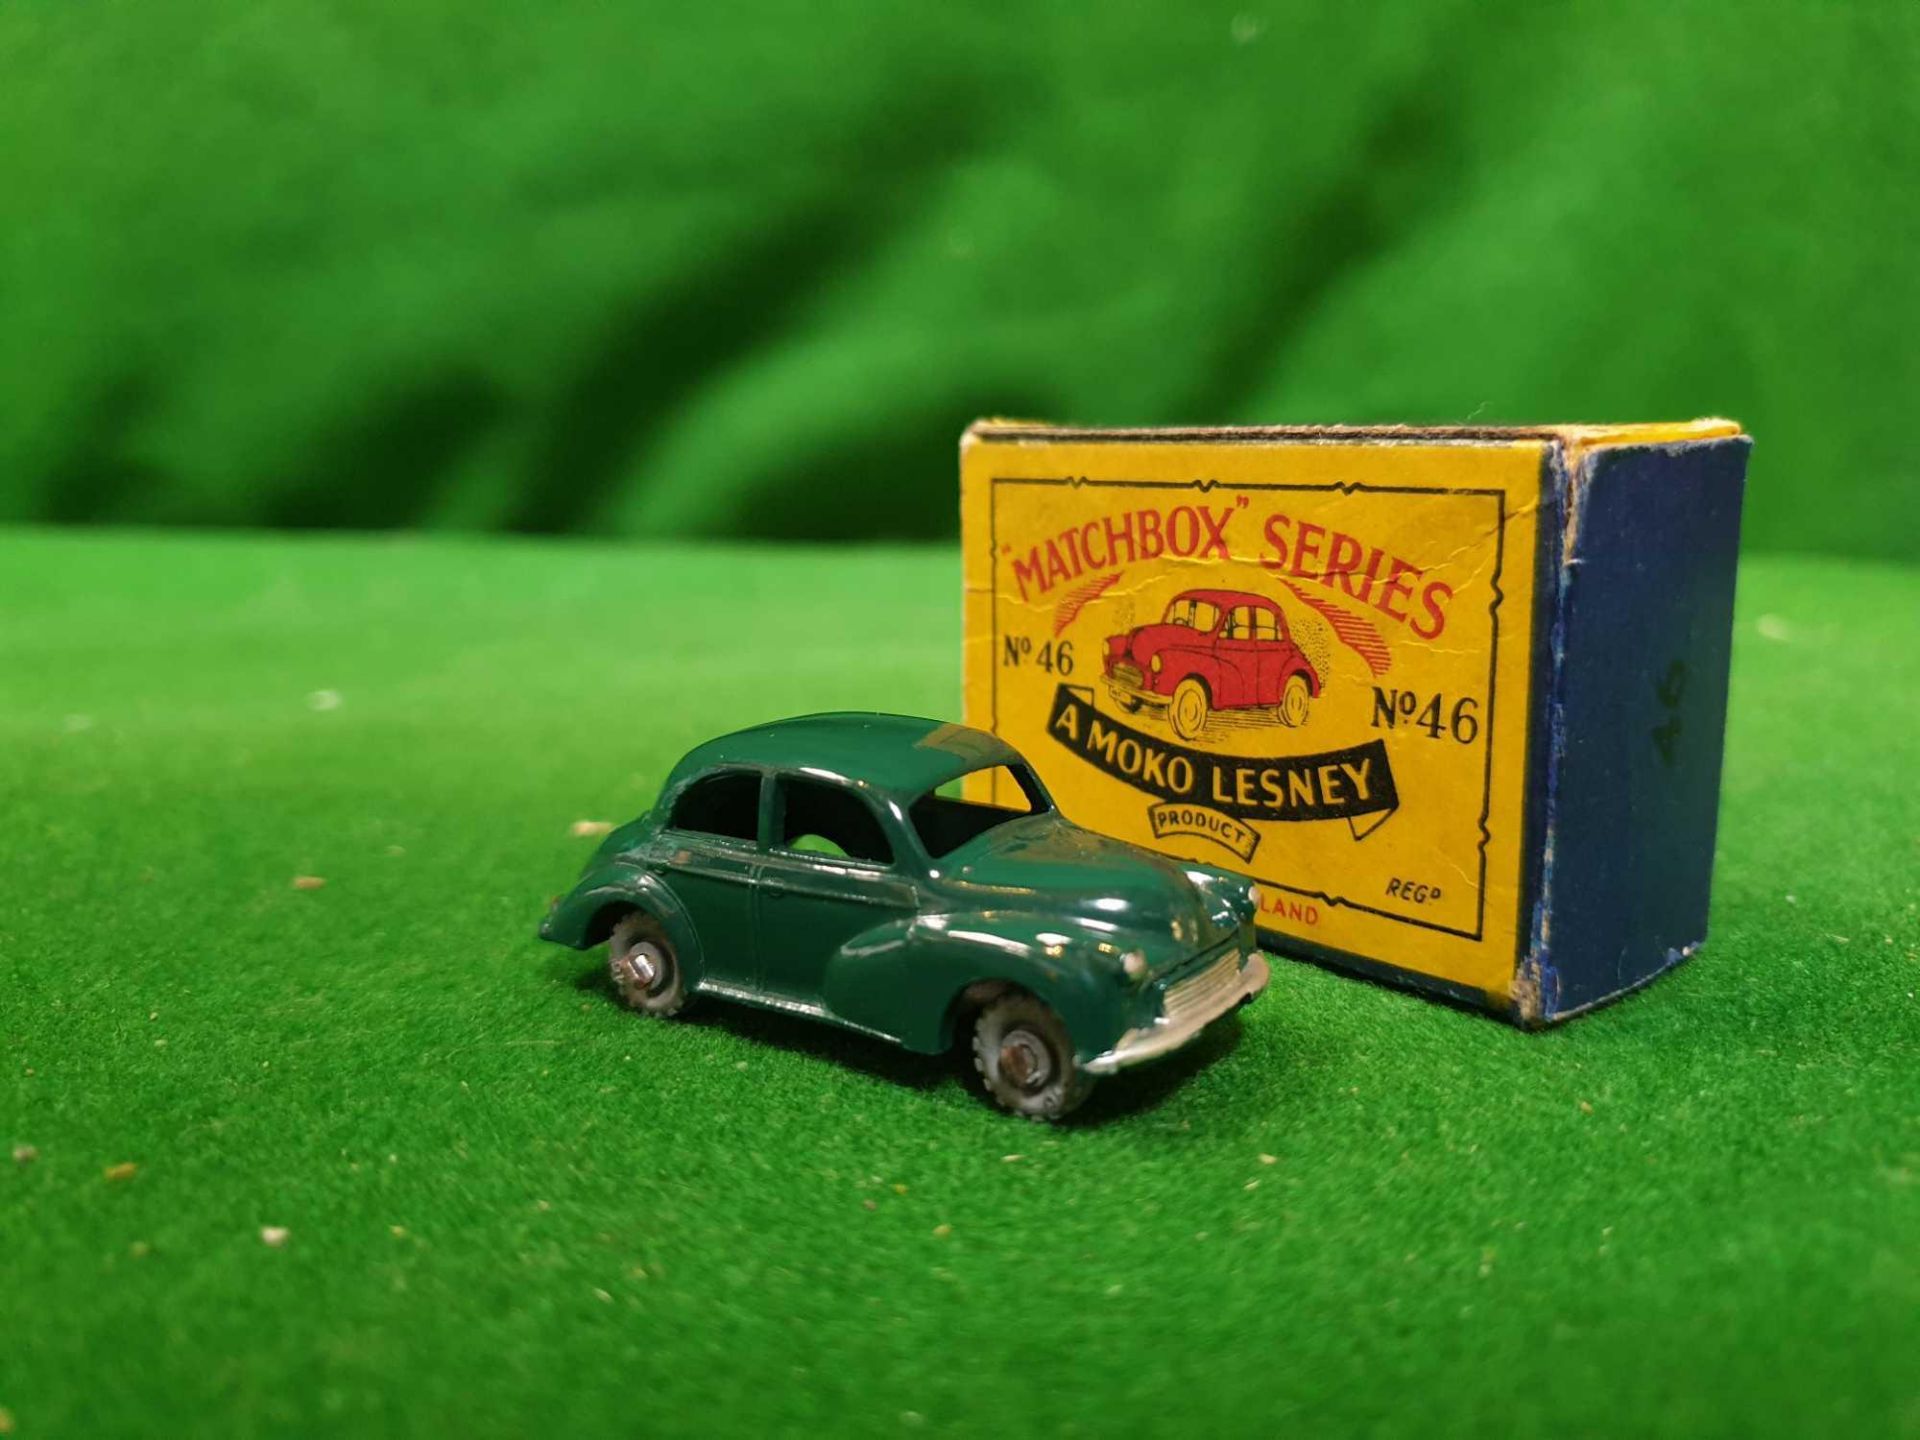 Matchbox Moko Lesney #46a Morris Minor 1000 Green Mint Model Very Good Box 1958-1960 - Image 3 of 3